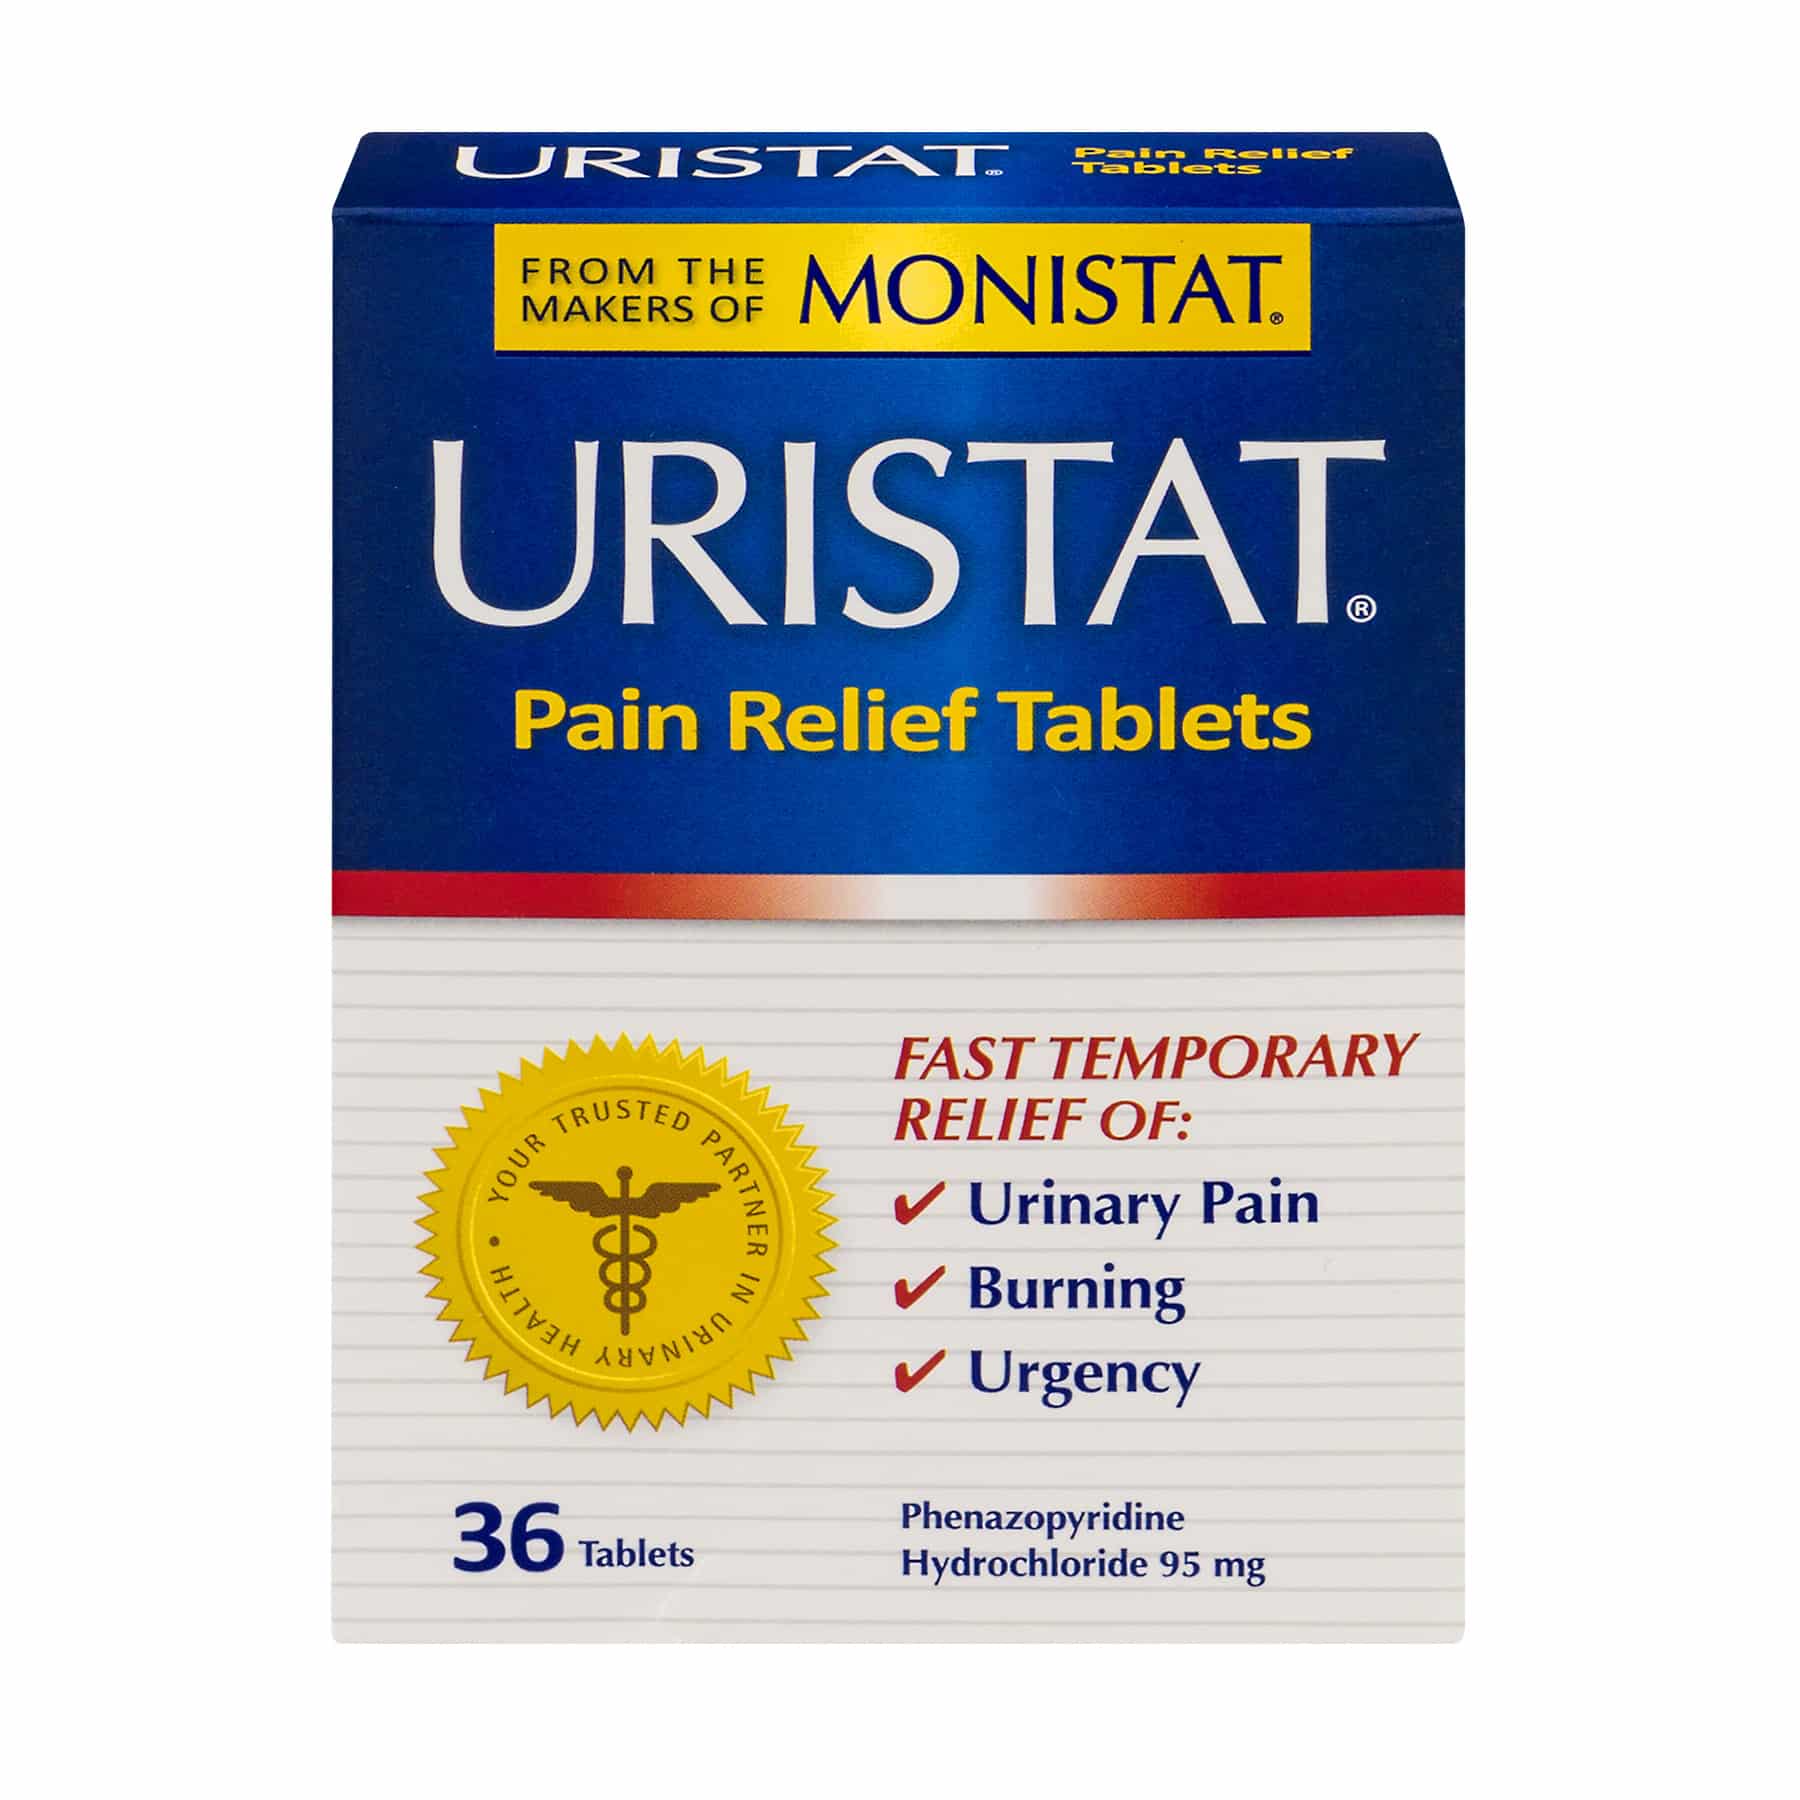 AZO Maximum Strength Urinary Pain Relief, UTI Pain Reliever, 12 ct ...